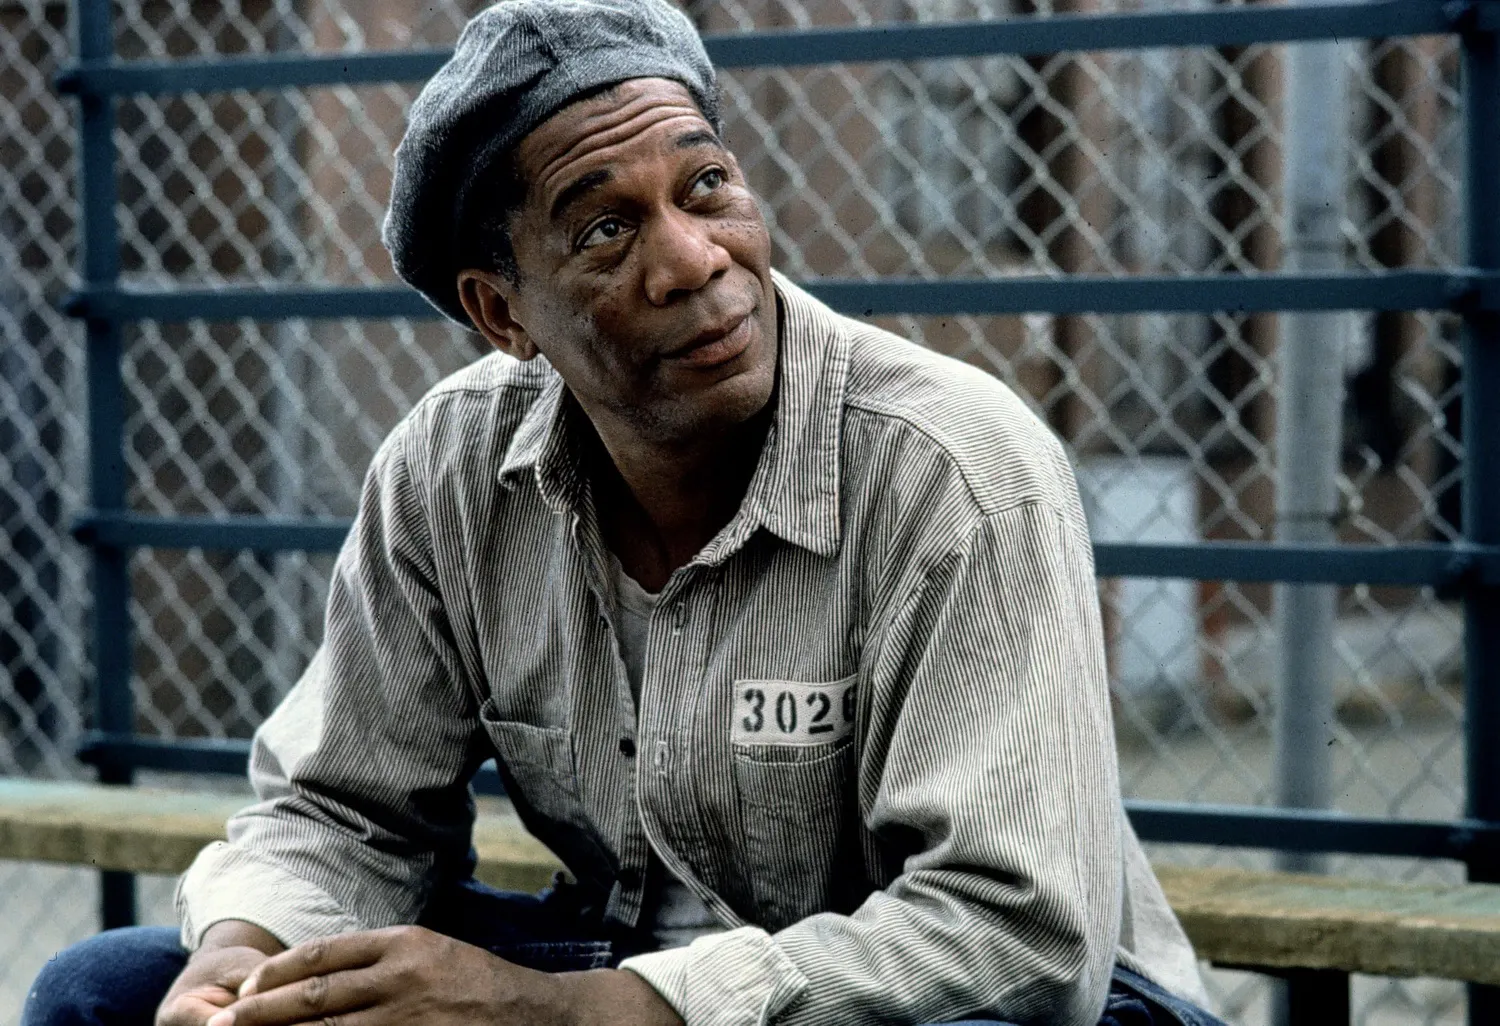 The Shawshank Redemption: Morgan Freeman as Red